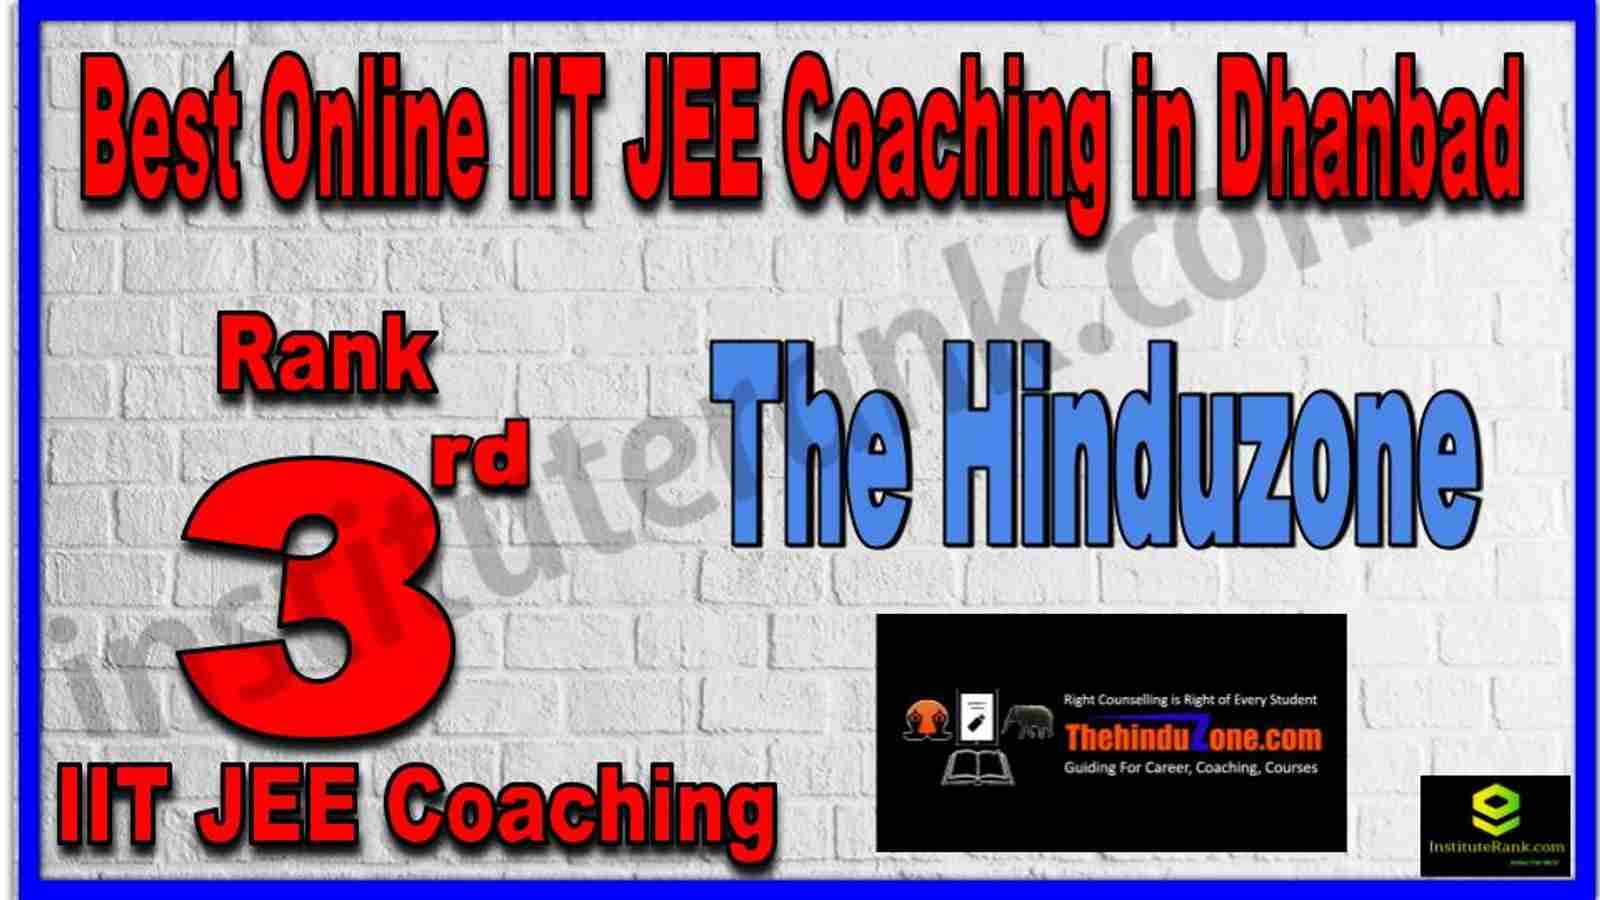 Rank 3rd Best Online IIT JEE Coaching in Dhanbad